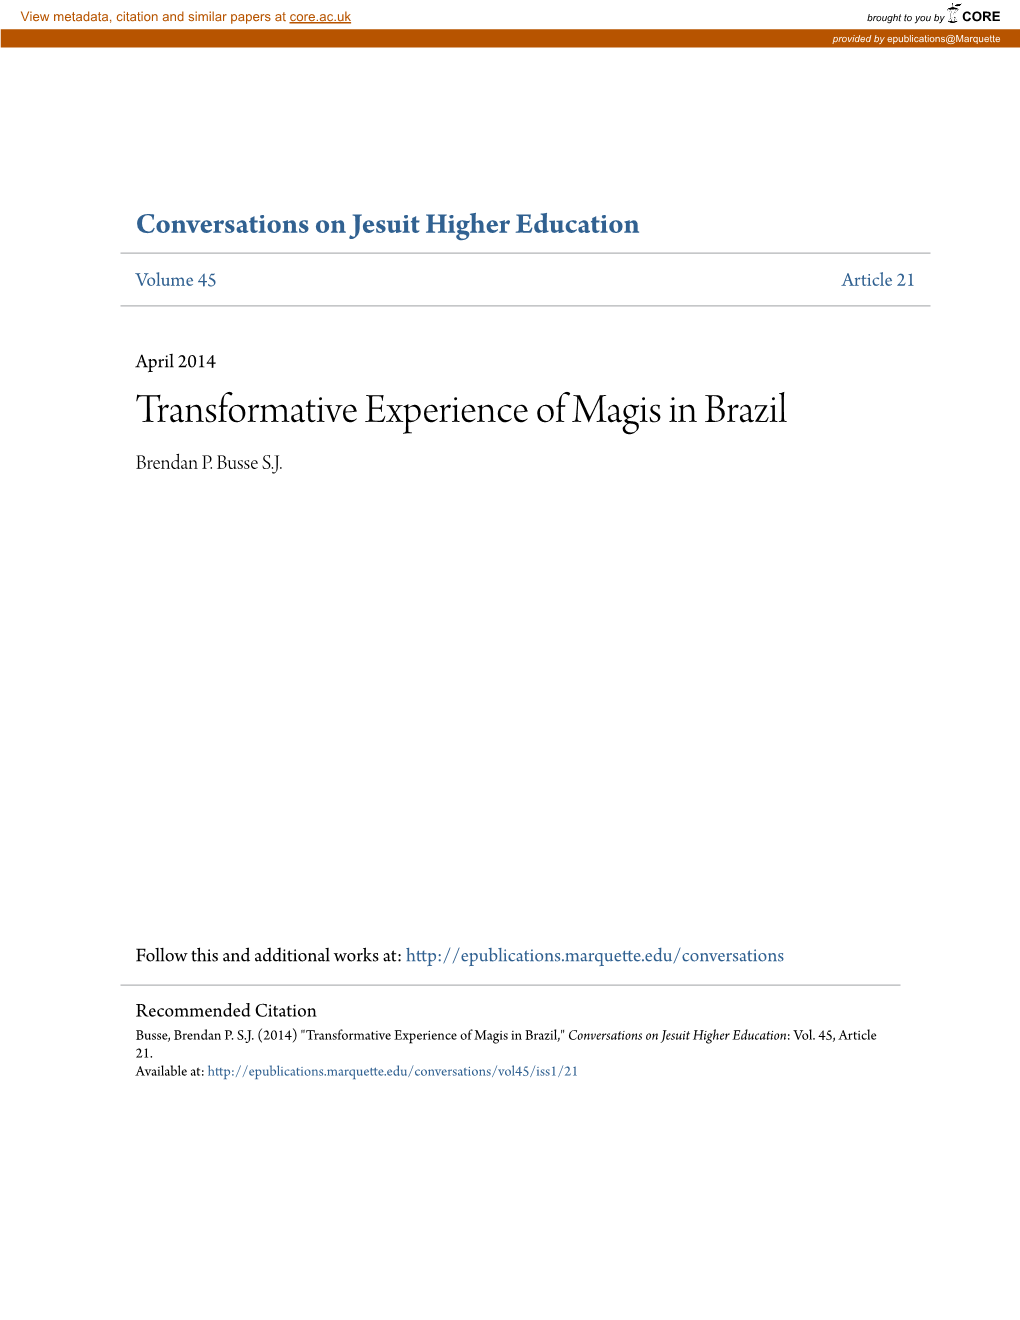 Transformative Experience of Magis in Brazil Brendan P